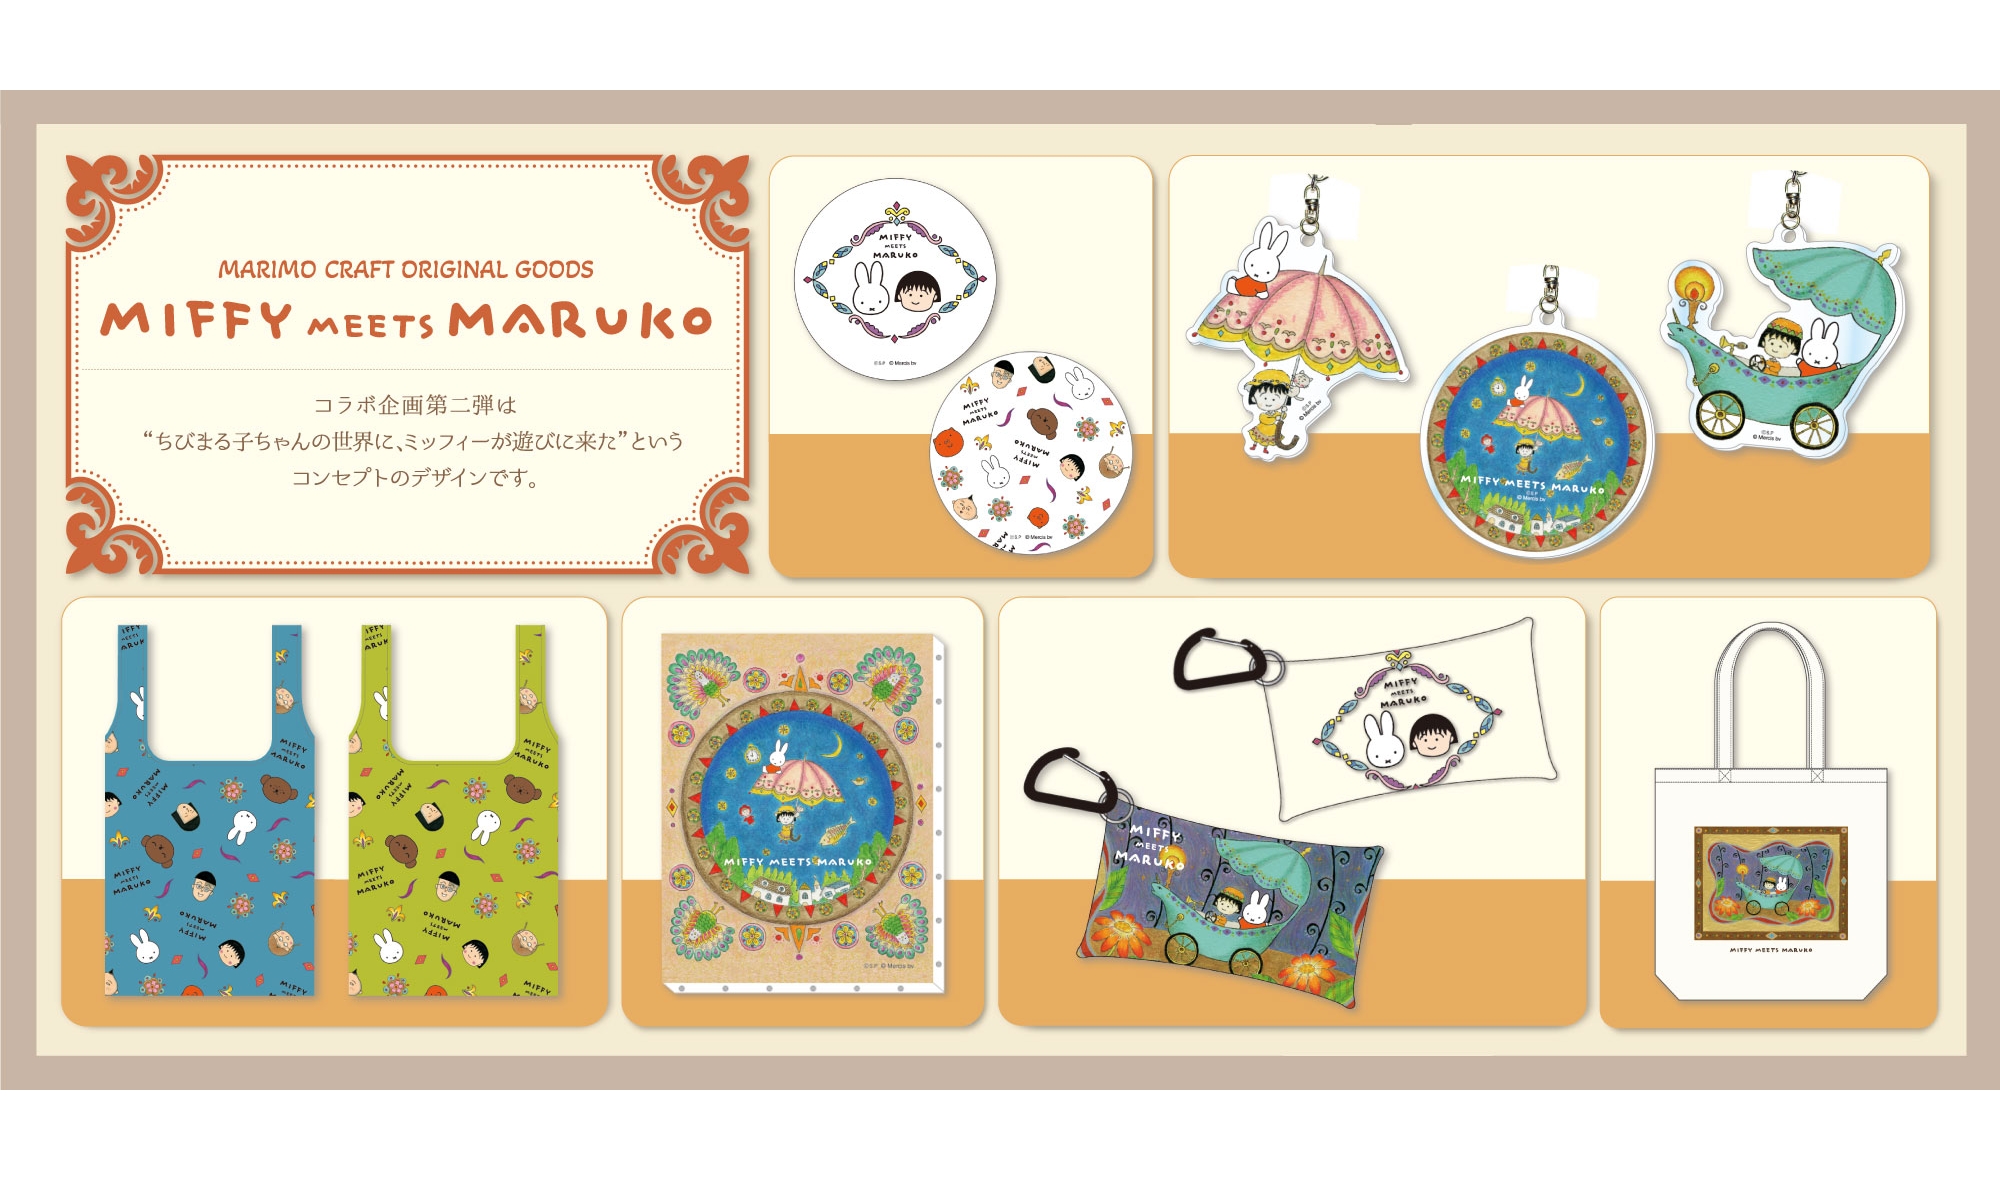 miffy-meets-maruko1-2